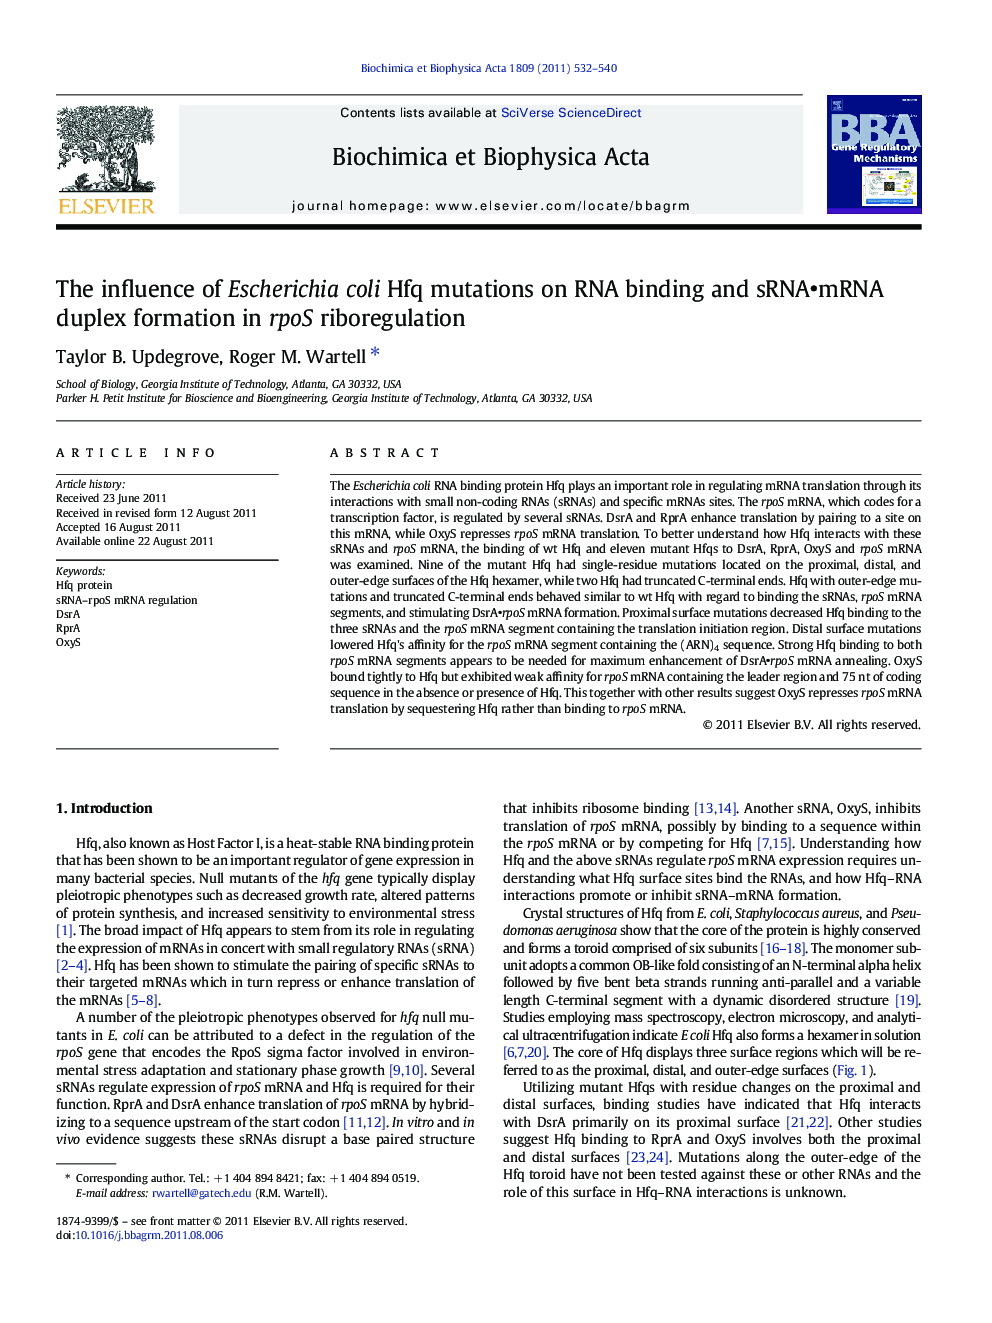 The influence of Escherichia coli Hfq mutations on RNA binding and sRNA•mRNA duplex formation in rpoS riboregulation